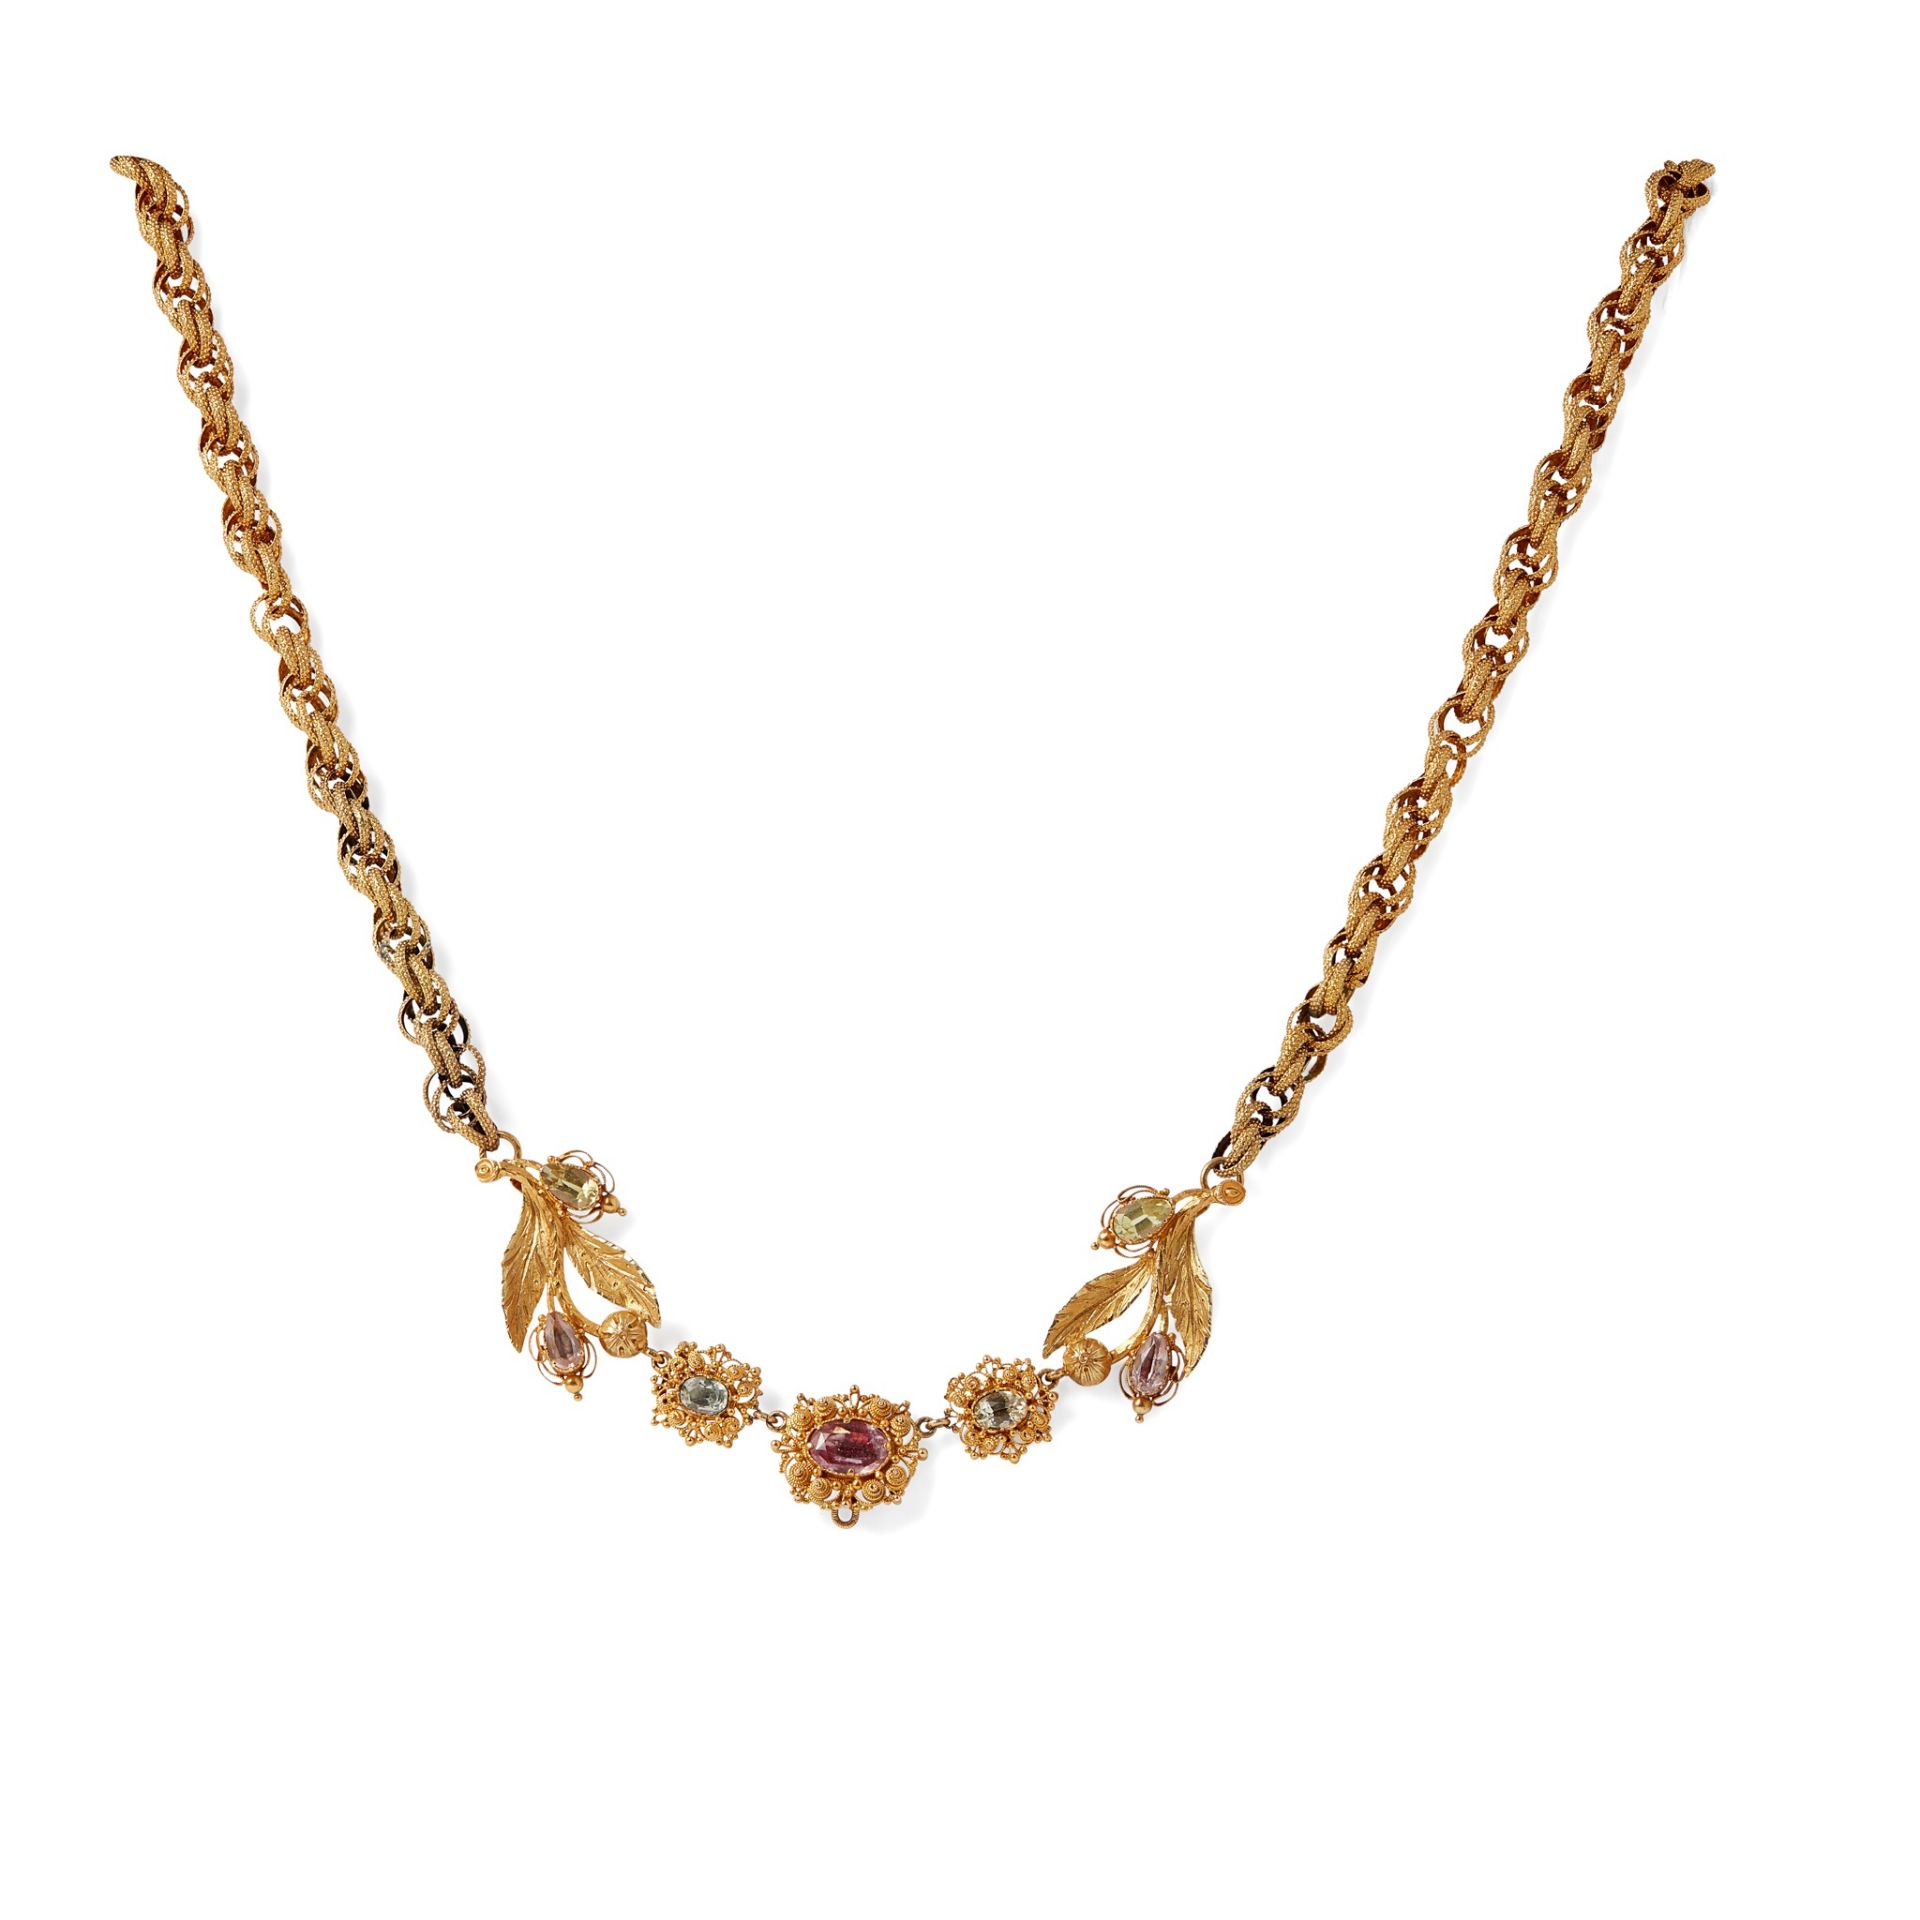 A multi-gem set necklace